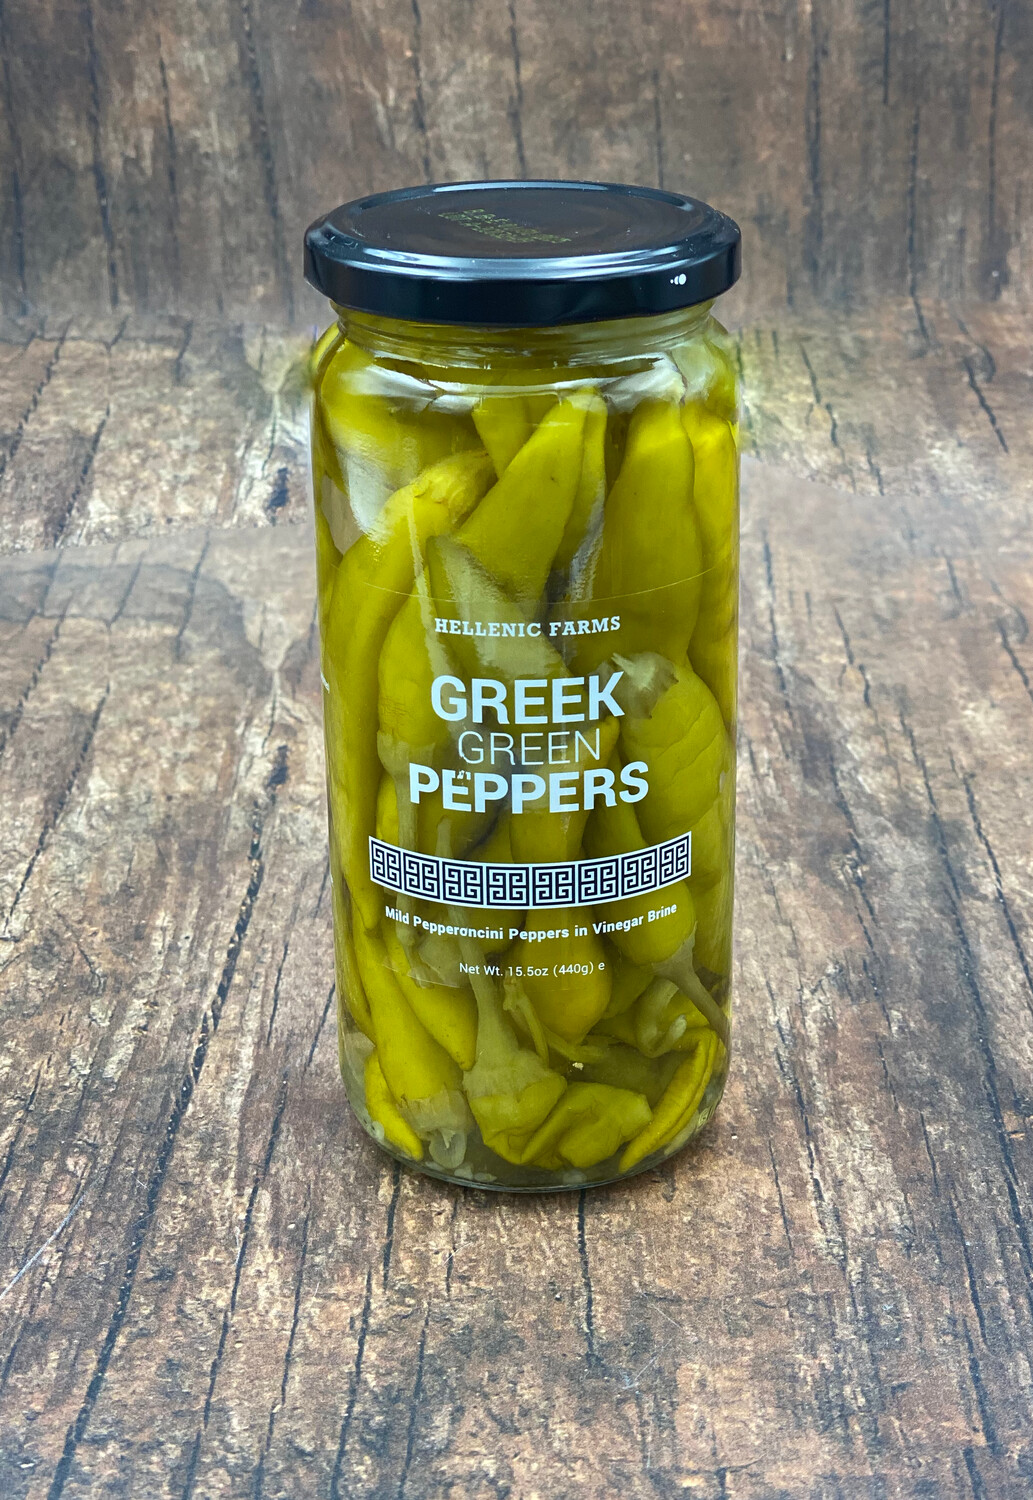 Greek Green Peppers Hellenic Farms